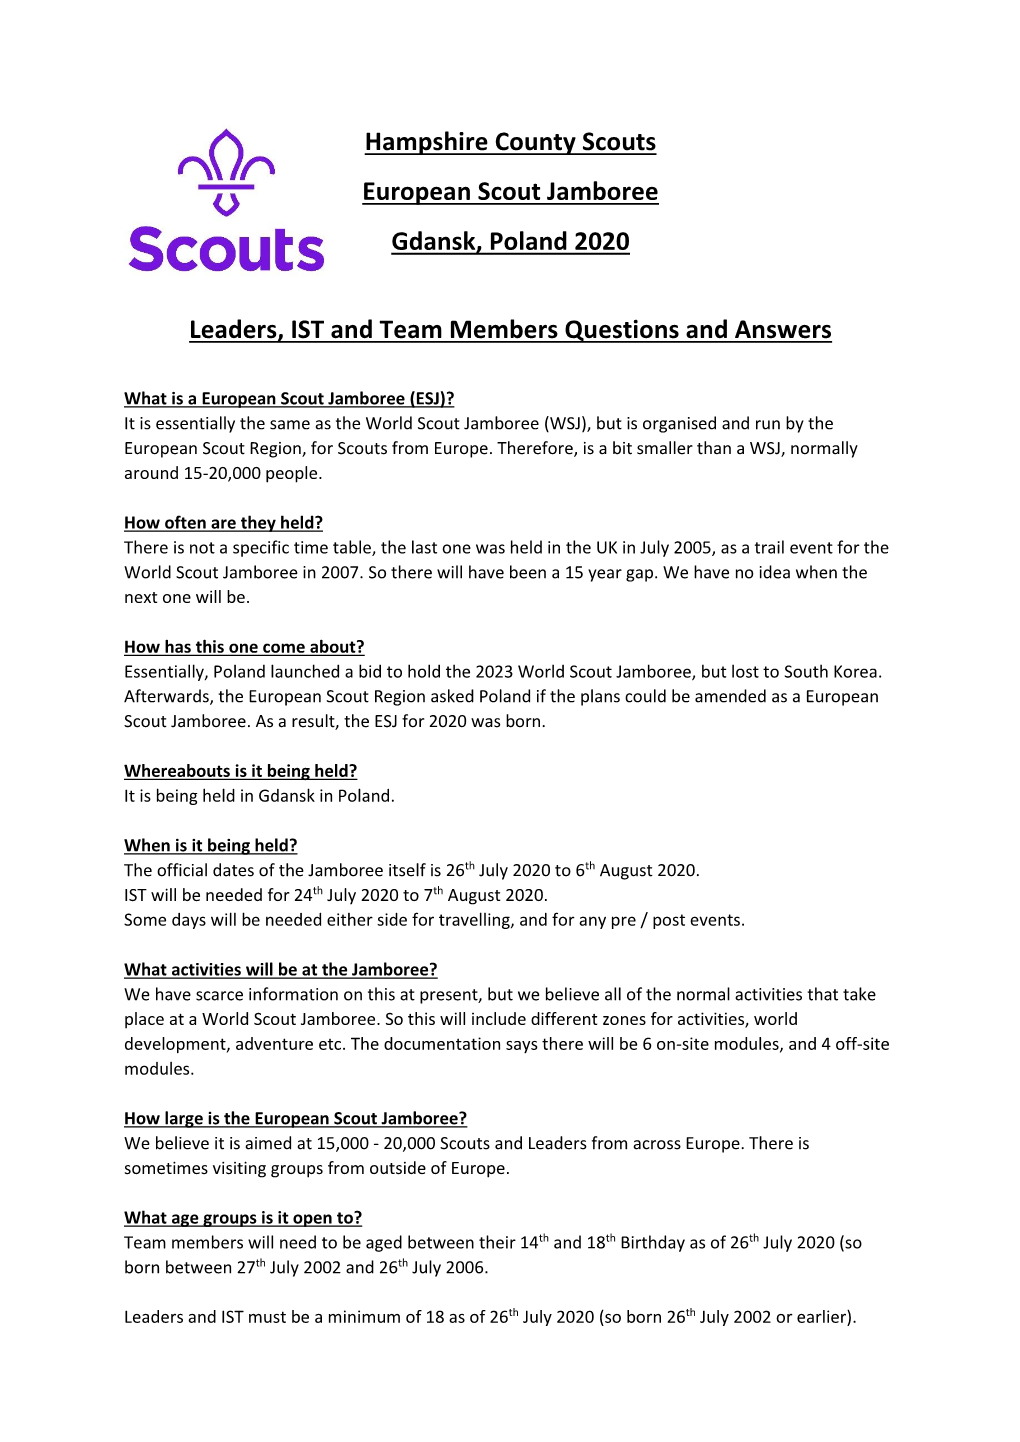 Hampshire County Scouts European Scout Jamboree Gdansk, Poland 2020